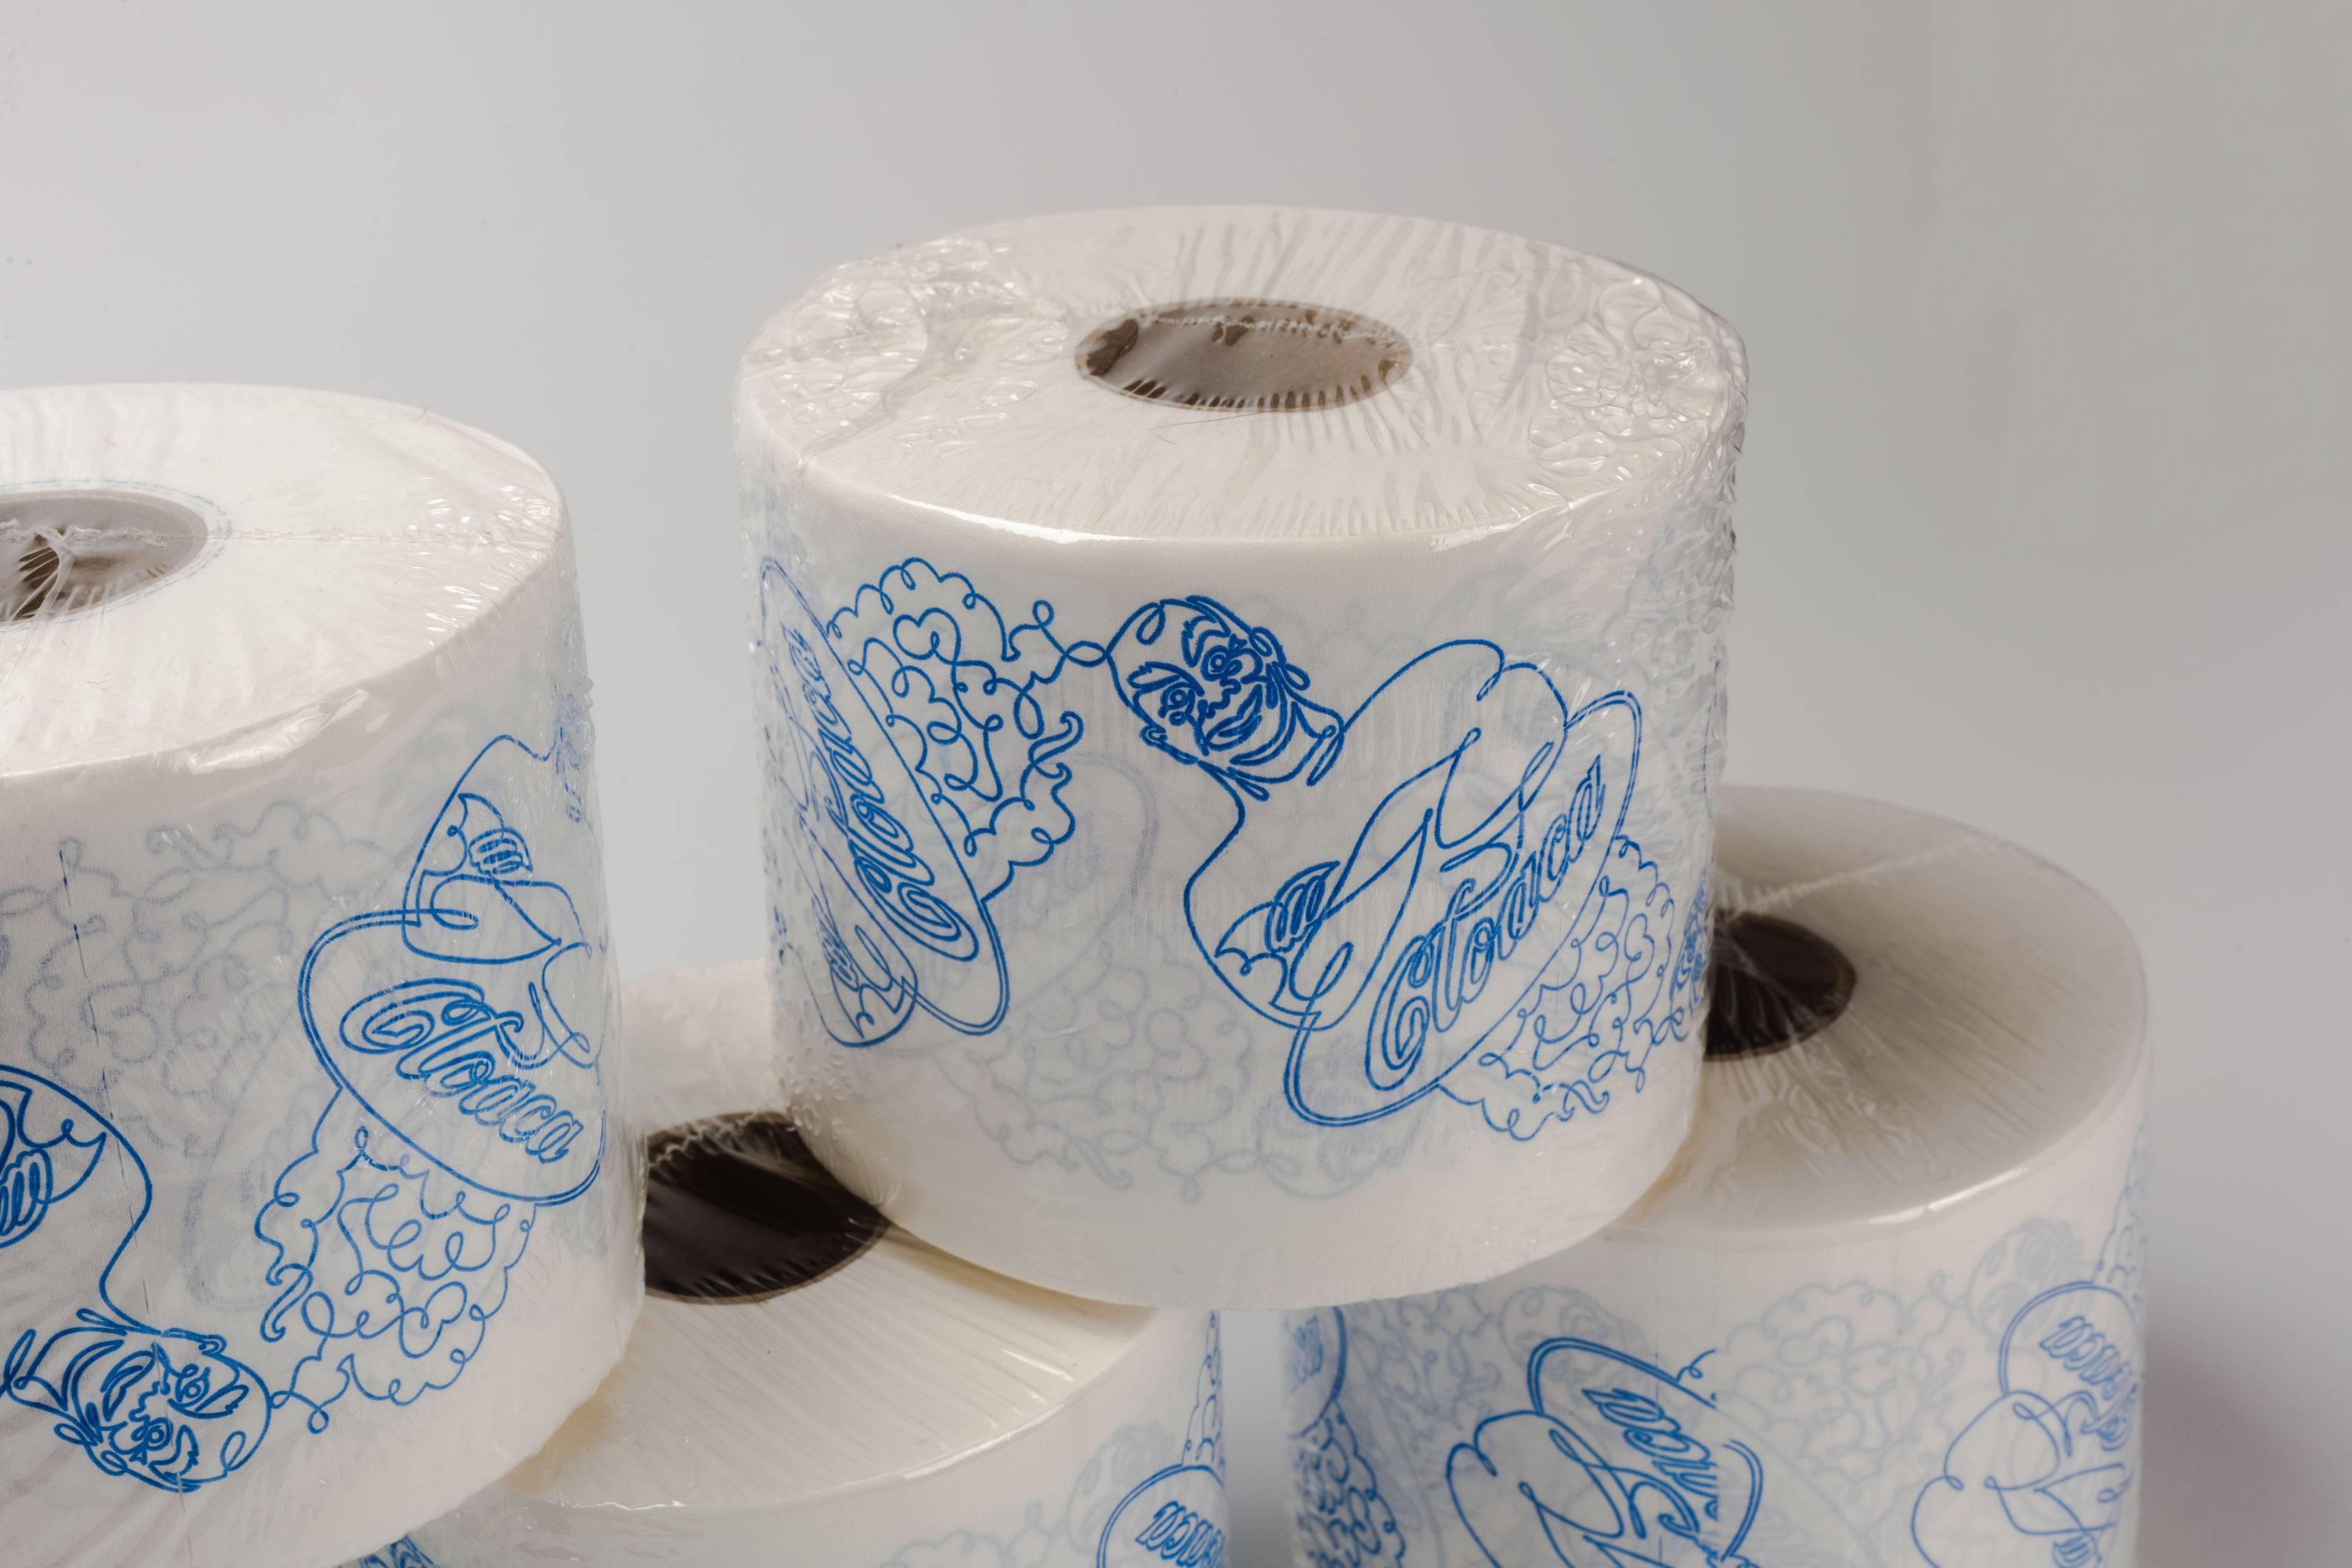 Post-Modern Super Cloaca Toilet Paper Roll, Wim Delvoye, 2007